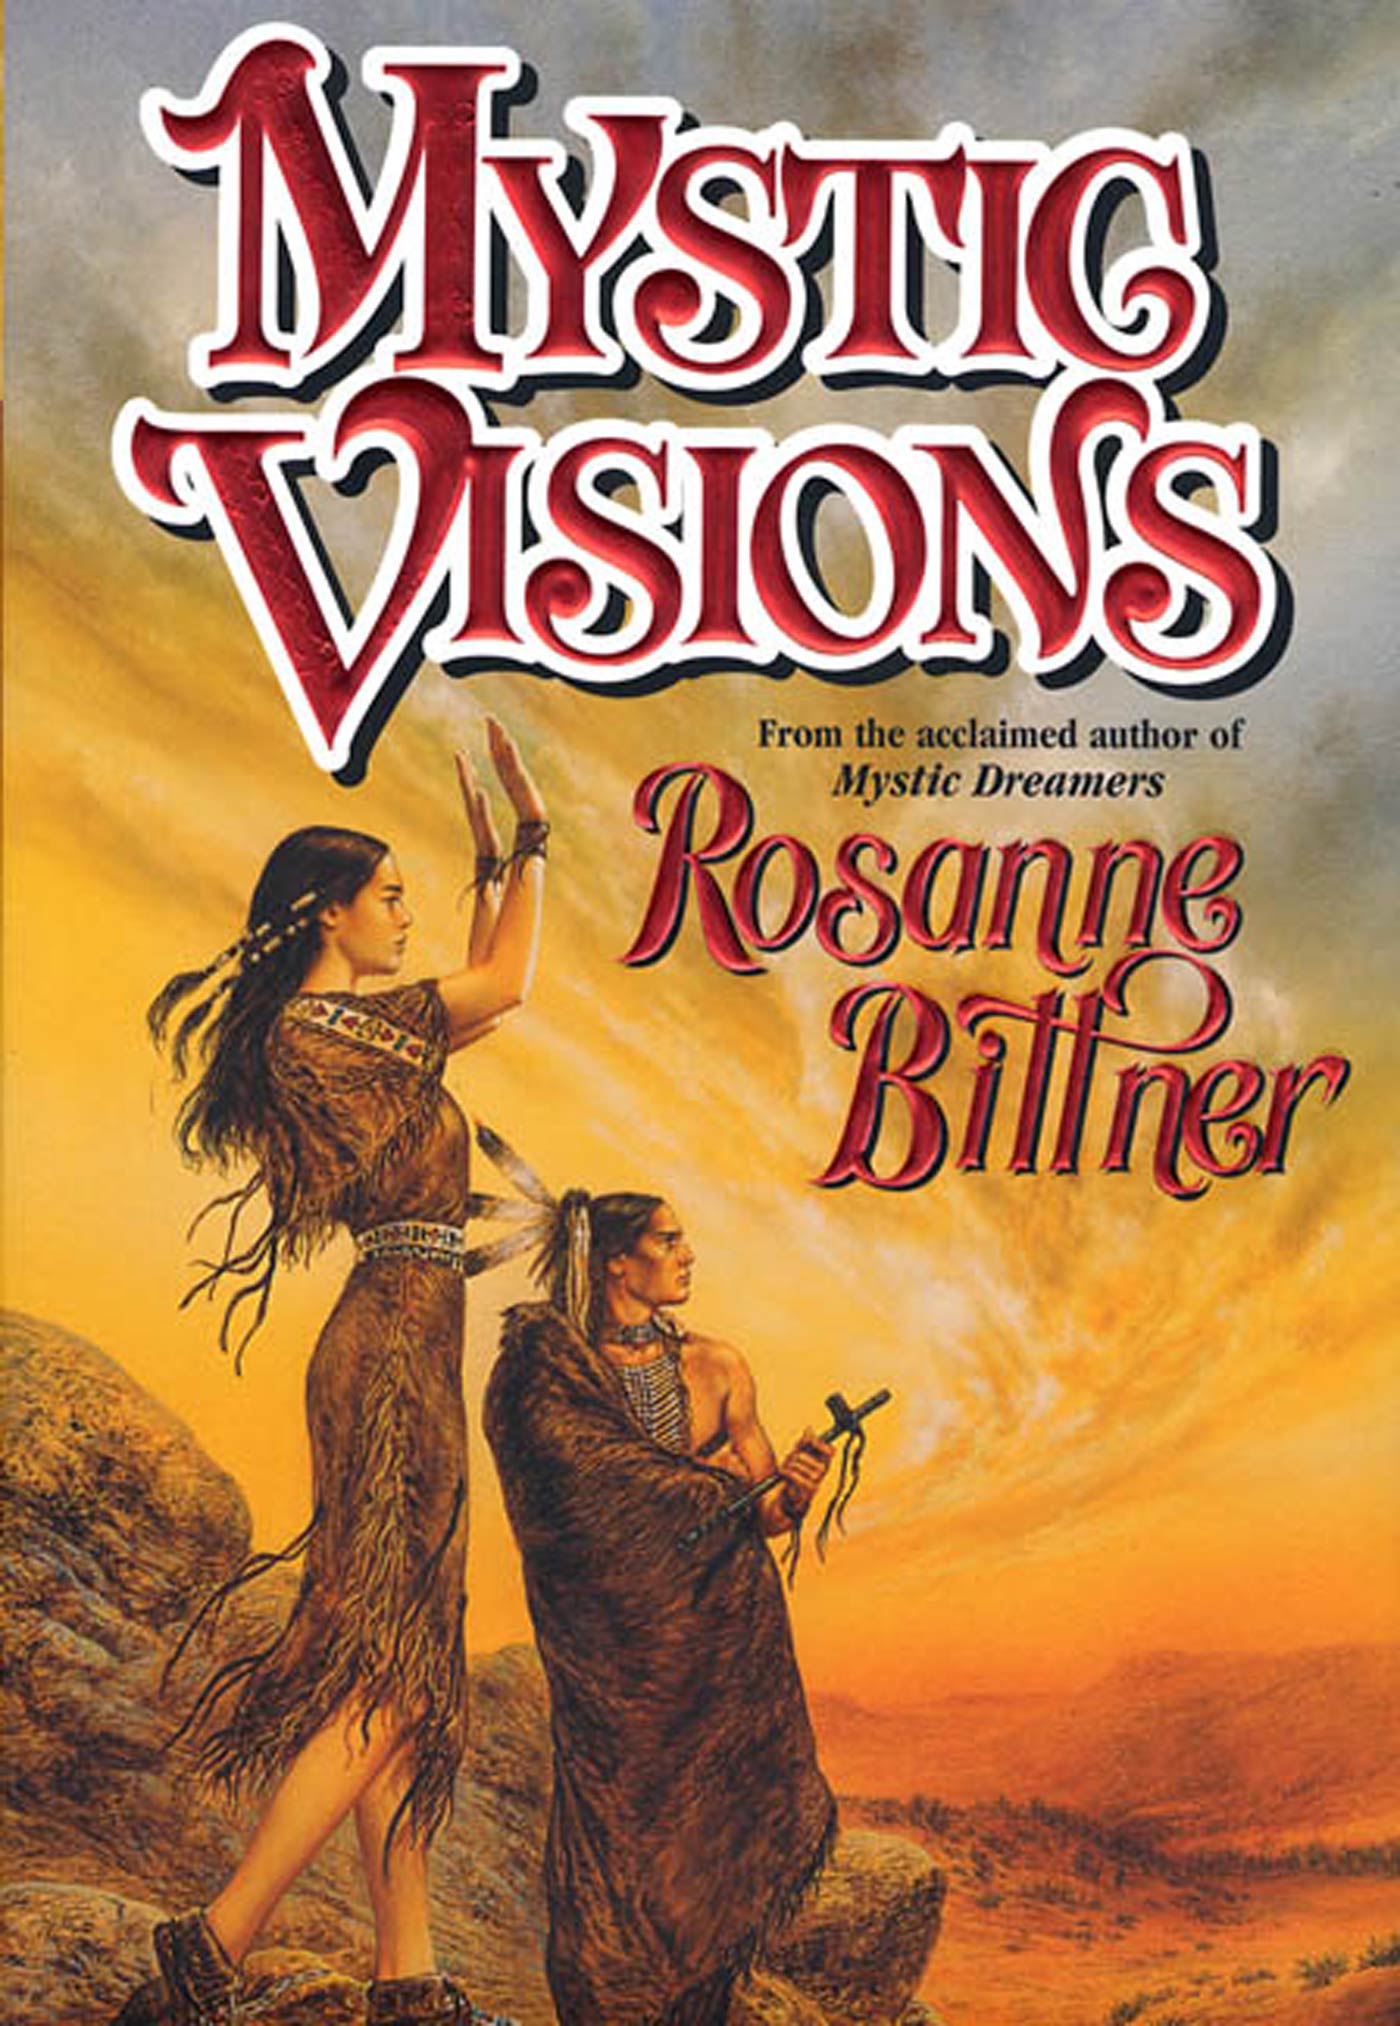 Mystic Visions by Rosanne Bittner